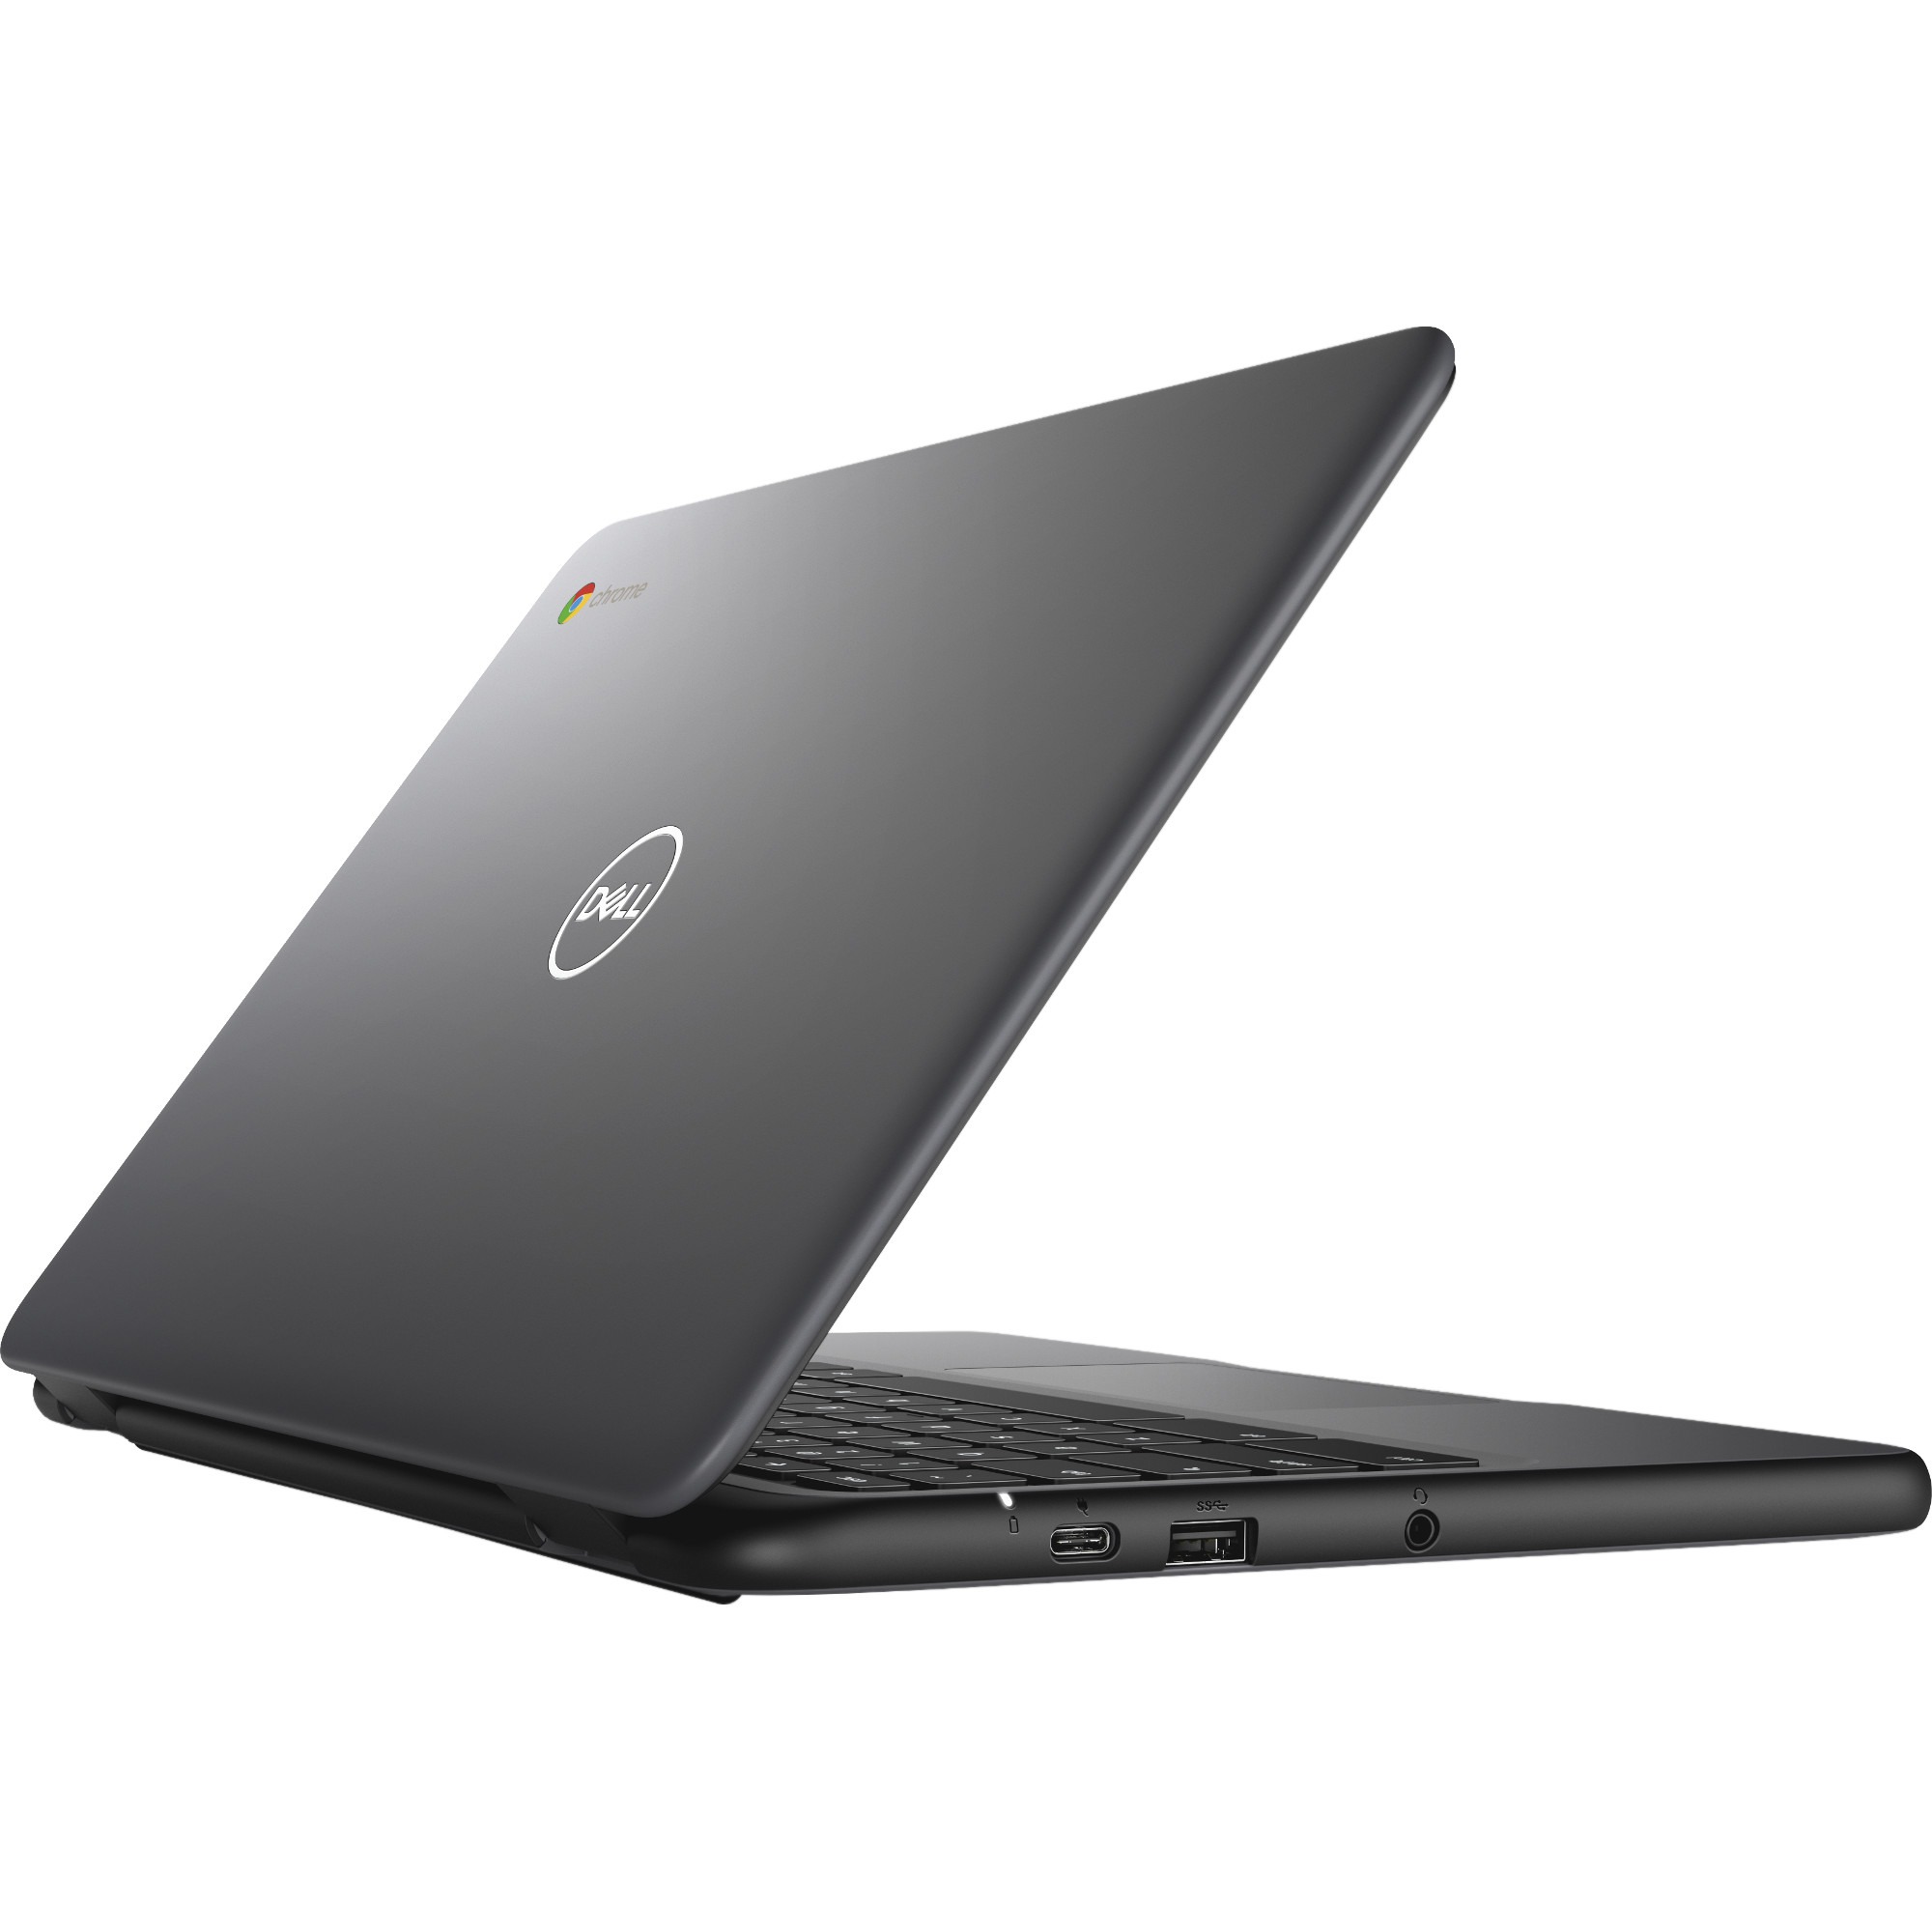 Dell Chromebook 11 3000 3100 11.6" Chromebook - Intel Celeron N4020 - 4GB RAM - 16GB Flash Memory - 1366 x 768 - Intel HD Graphics - Chrome OS - Black - image 5 of 5